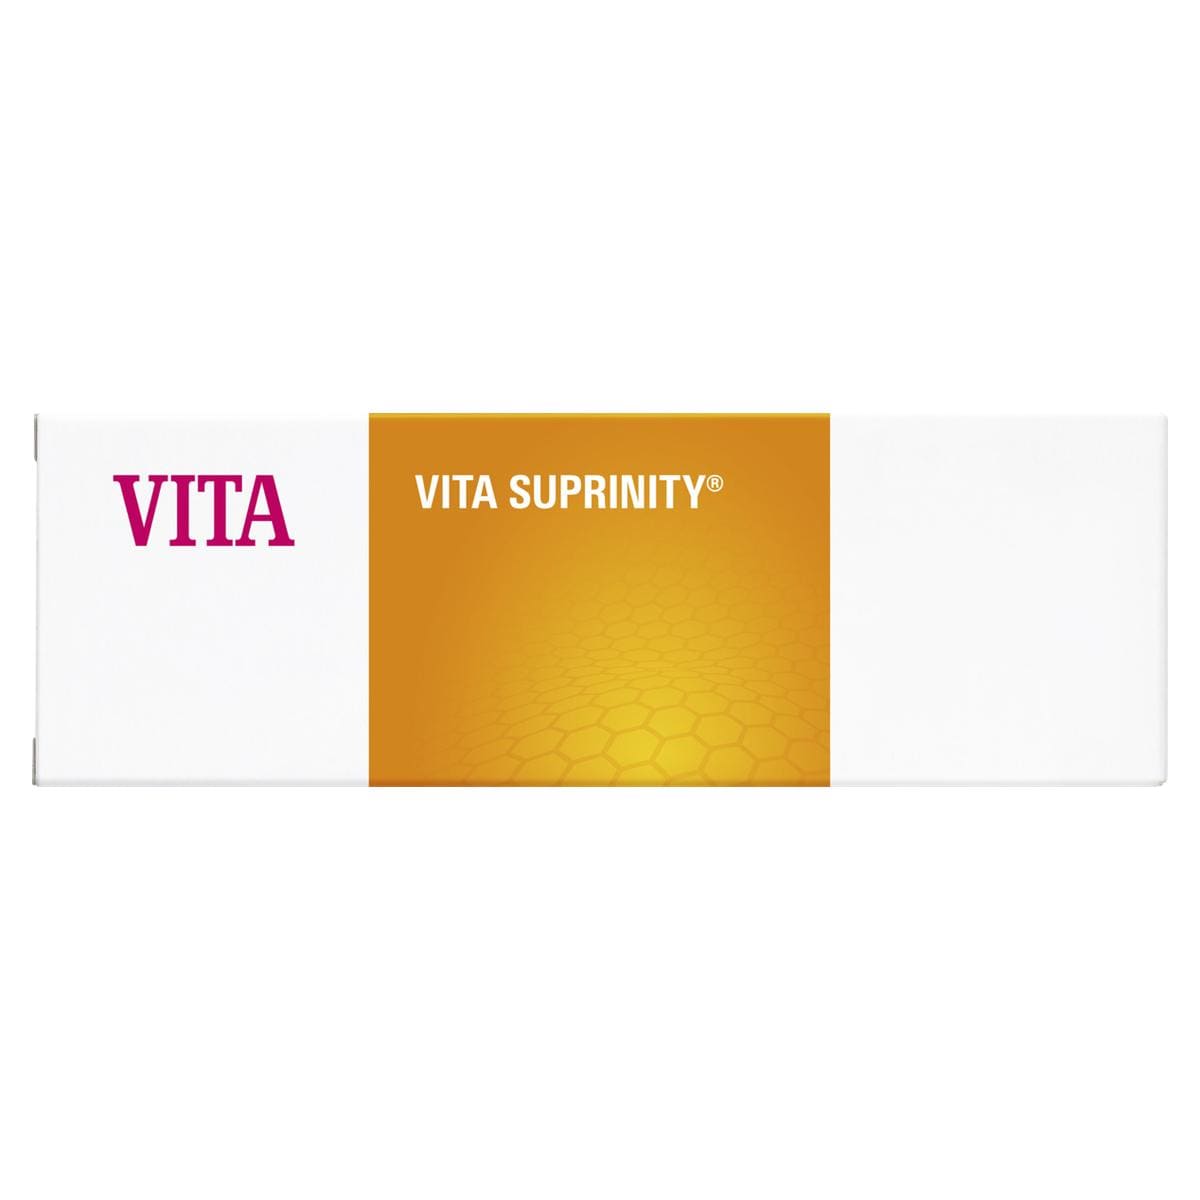 VITA SUPRINITY® PC UNIVERSAL - A1-HT, Packung 5 Stück